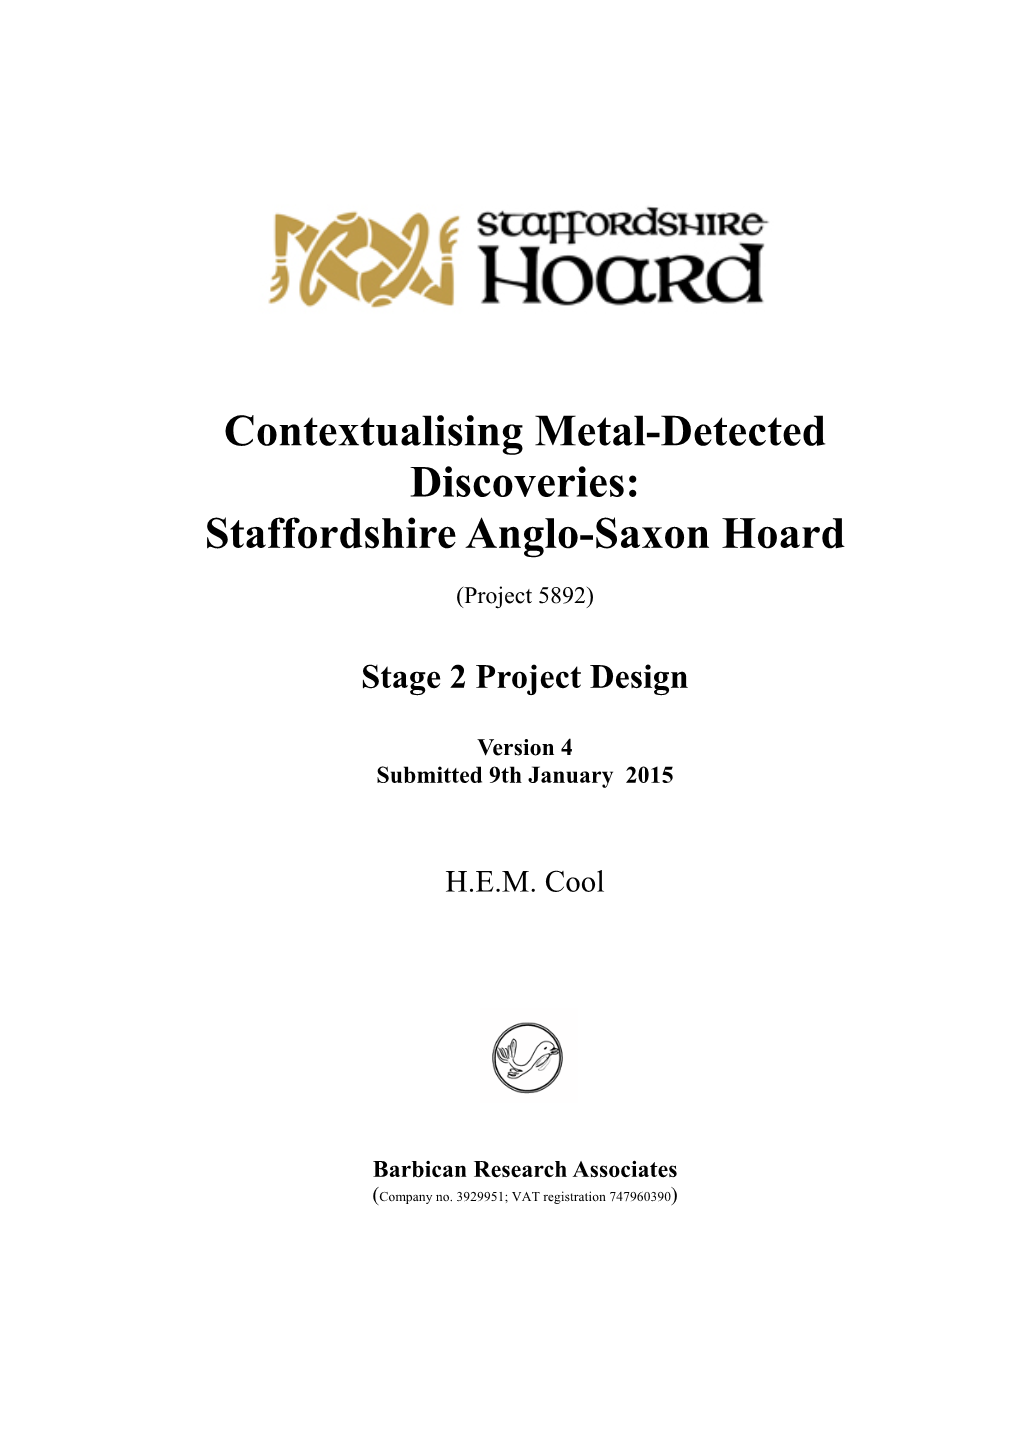 Staffordshire Anglo-Saxon Hoard